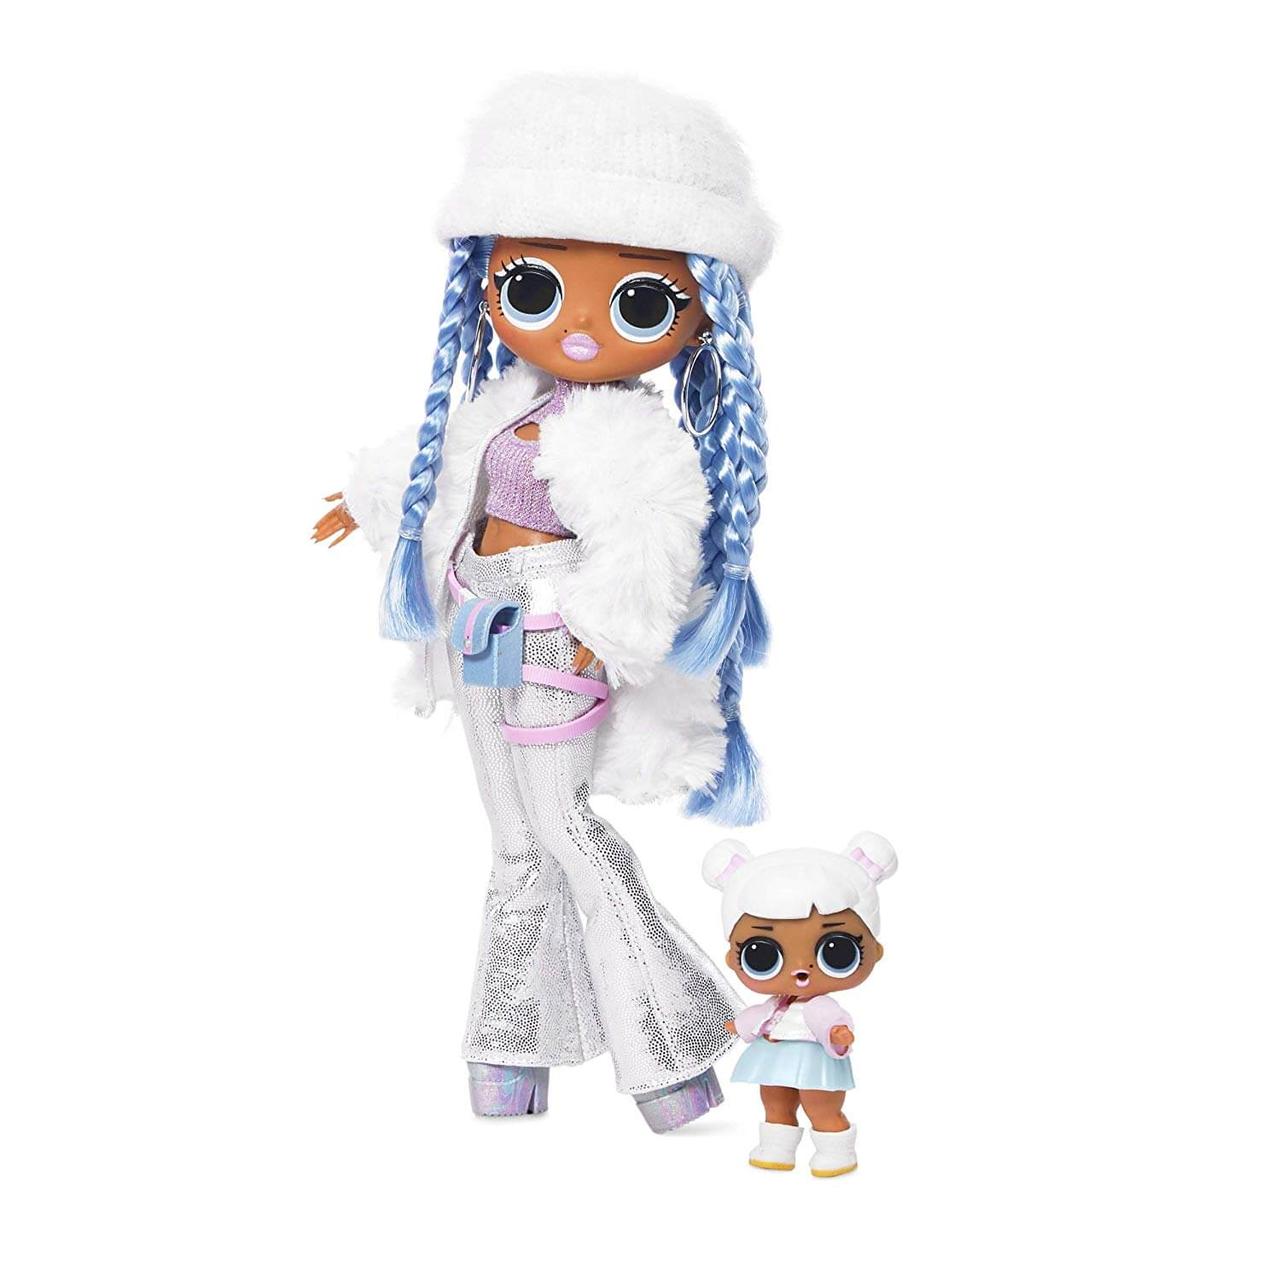 L.O.L. Surprise! O.M.G. Winter Disco Snowlicious & Sister Кукла Снежная и ее сестра Снежный Ангел